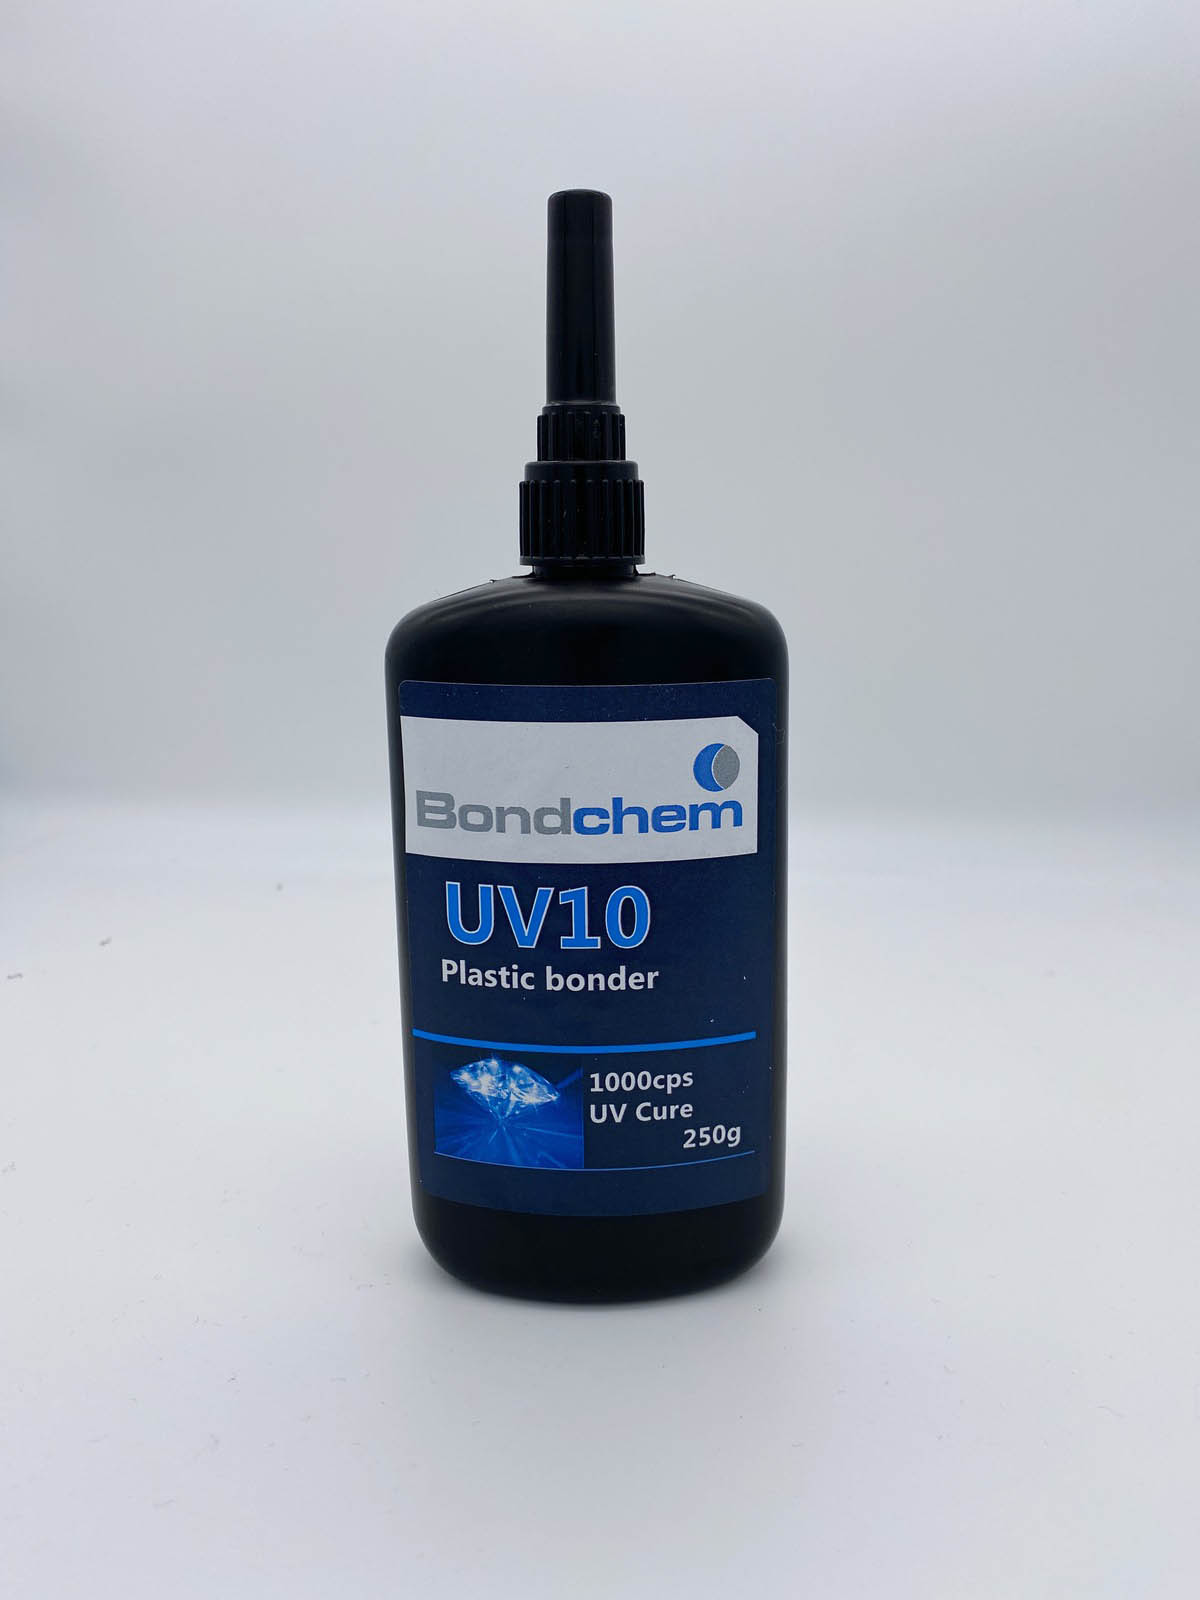 Bondchem UV 10 Light curing adhesive